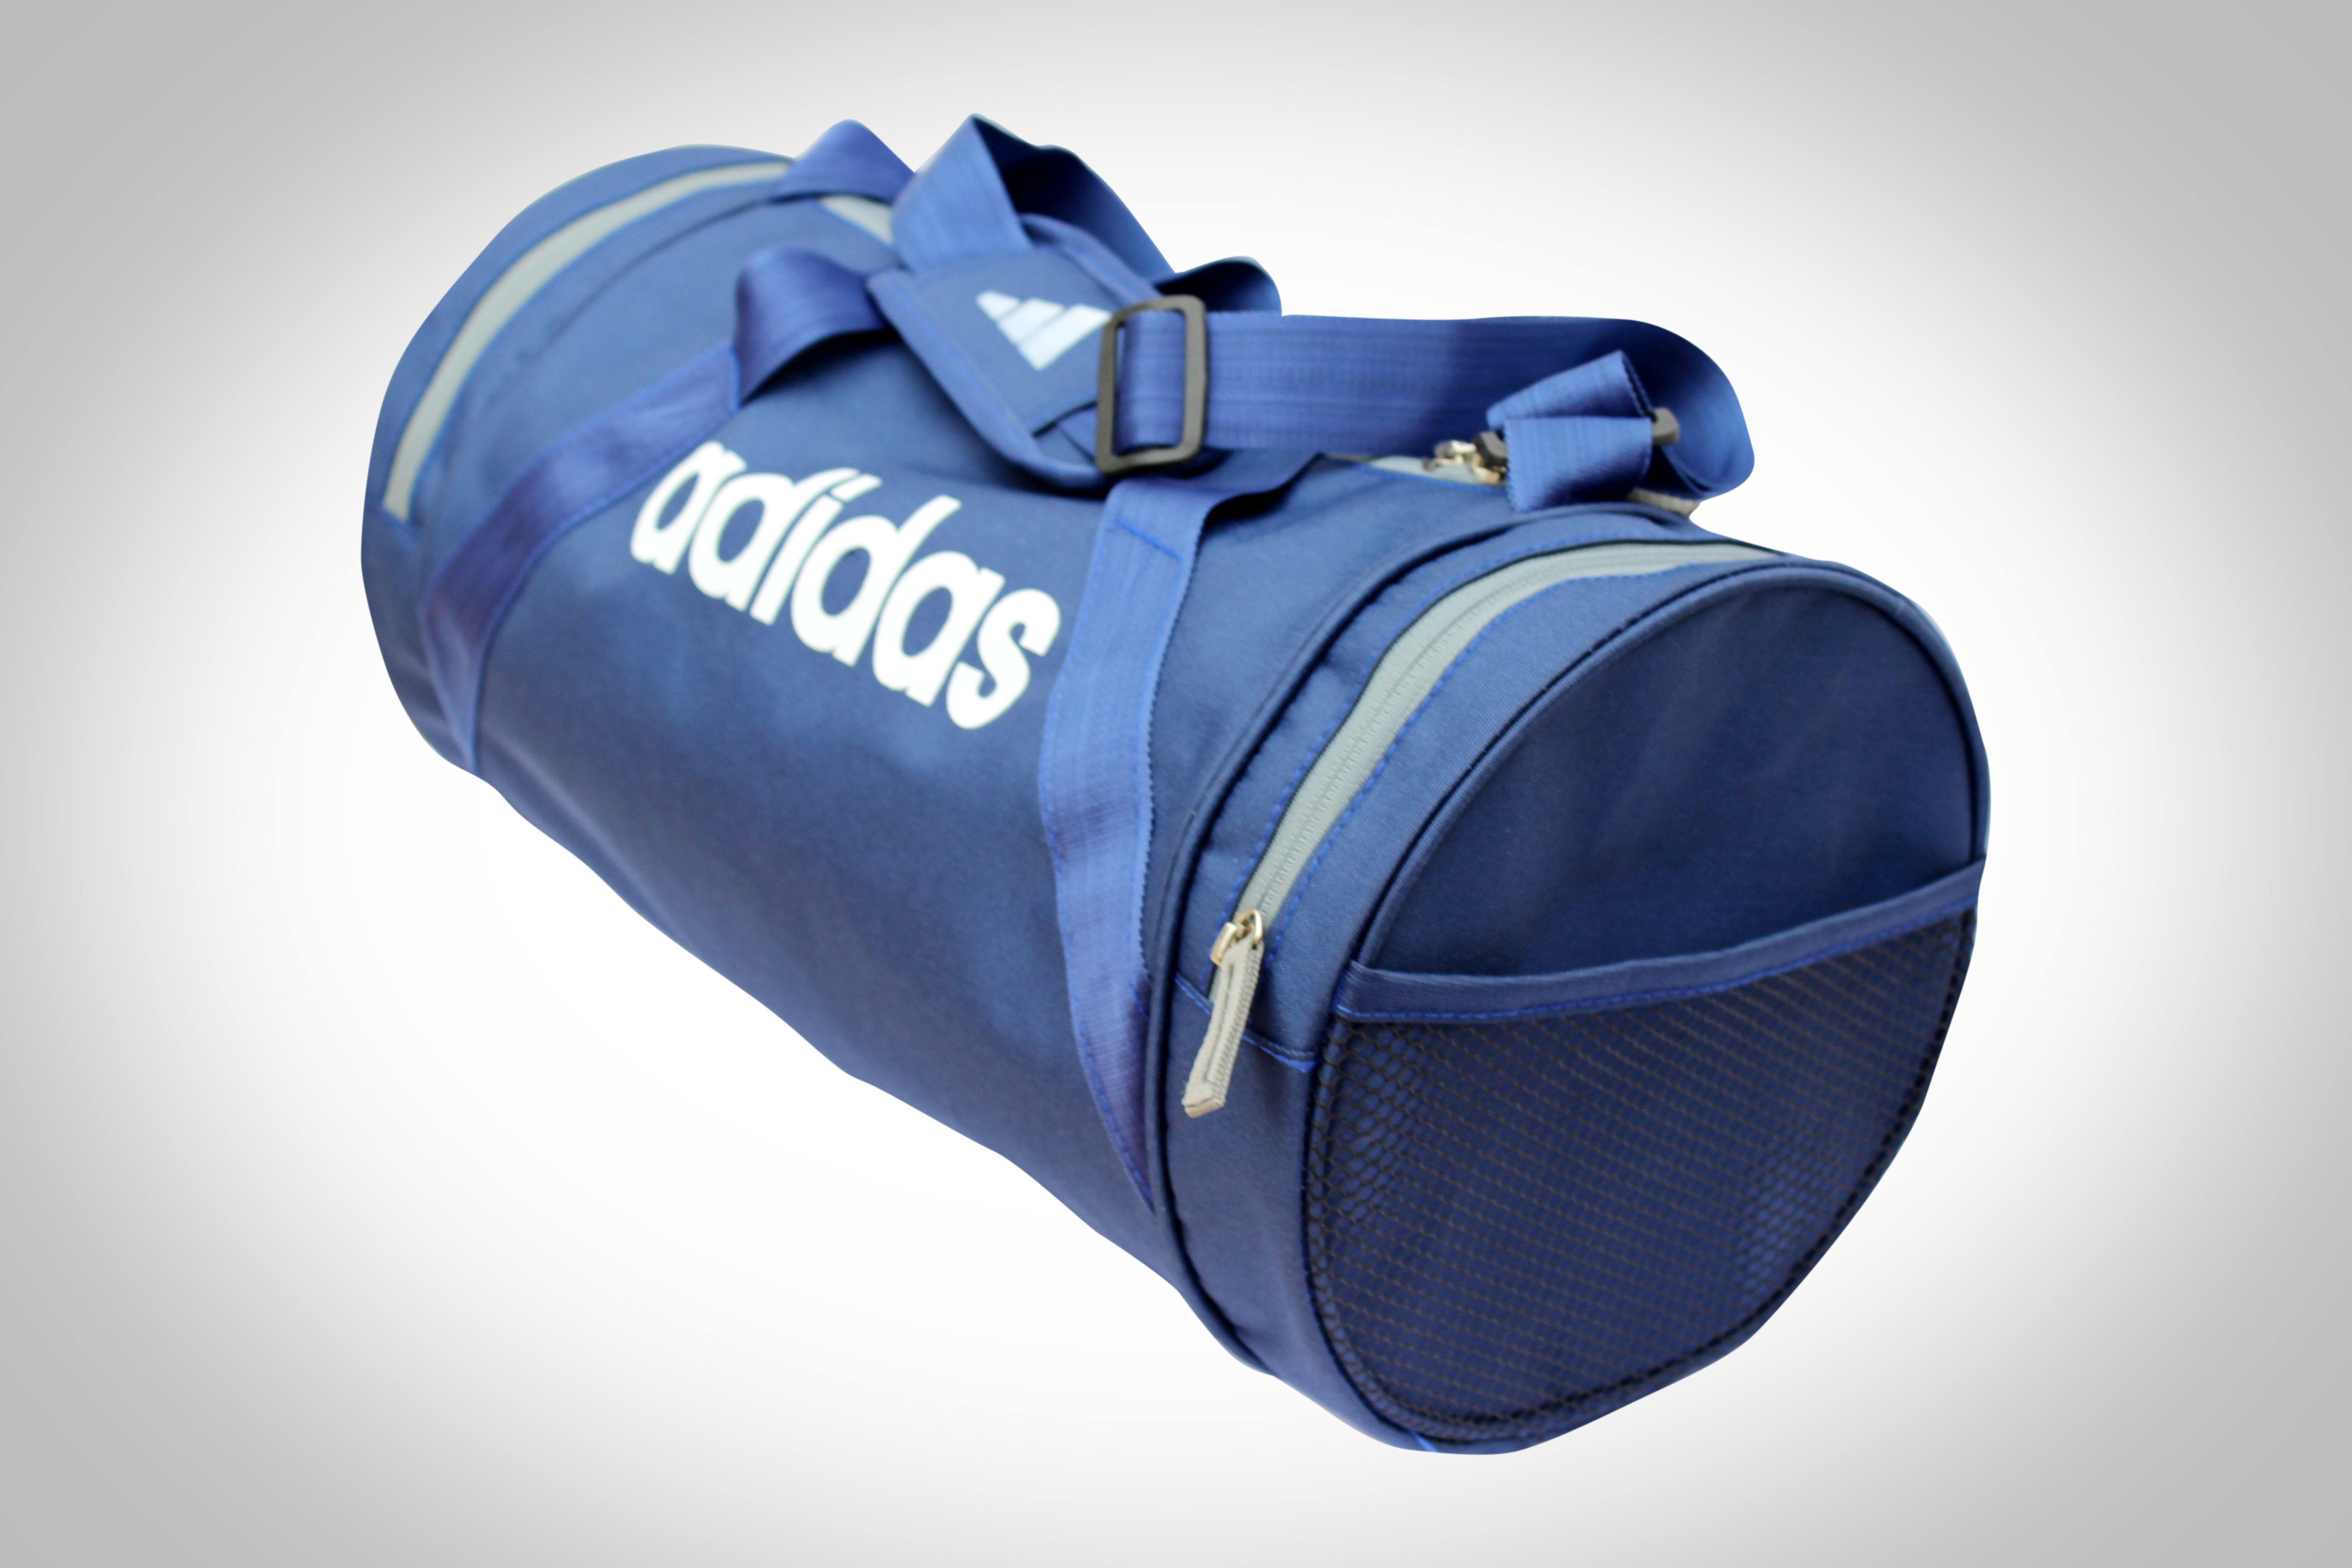 Adidas Medium Canvas Gym Bag Buy Adidas Medium Canvas Gym Bag Online At Low Price Snapdeal